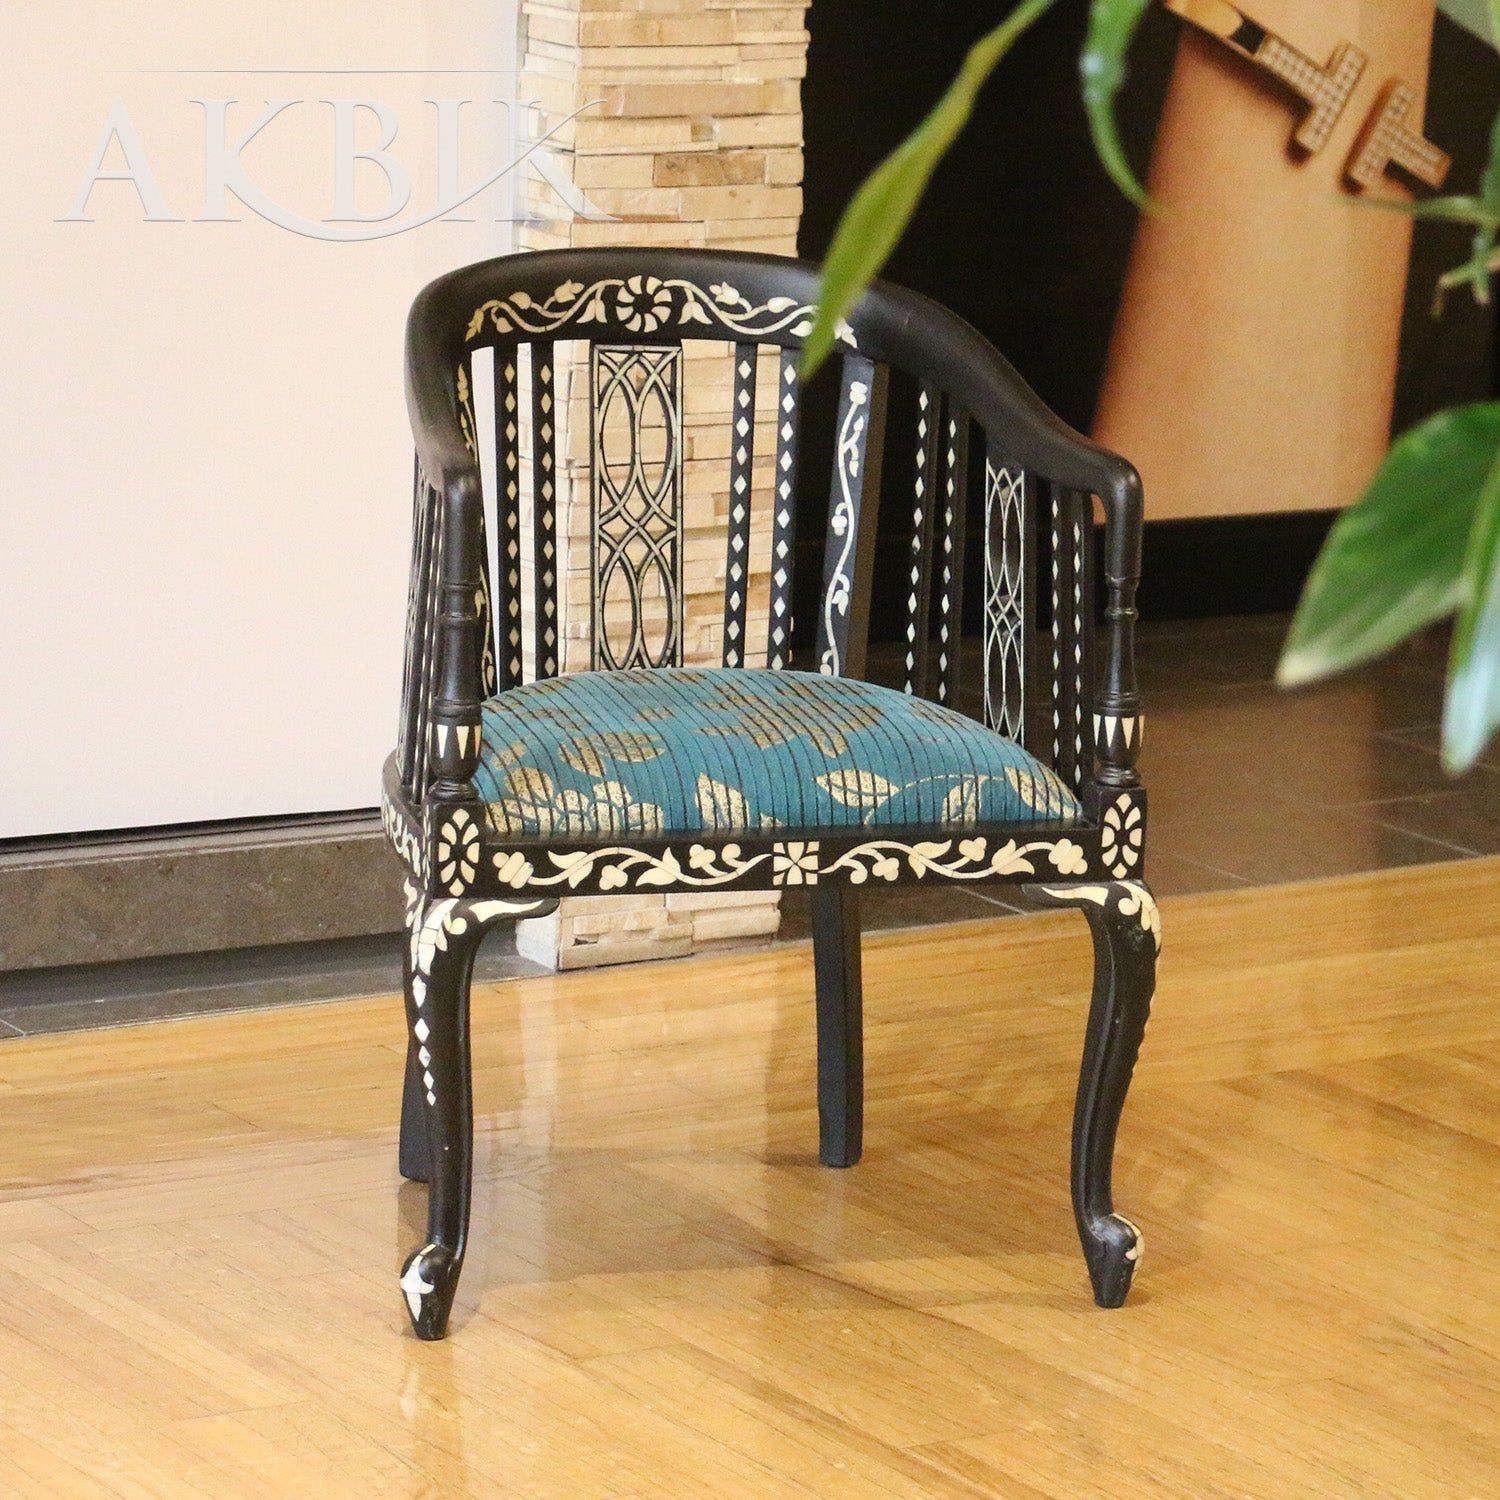 Stylish Design Mother Of Pearl Chair - AKBIK Furniture & Design